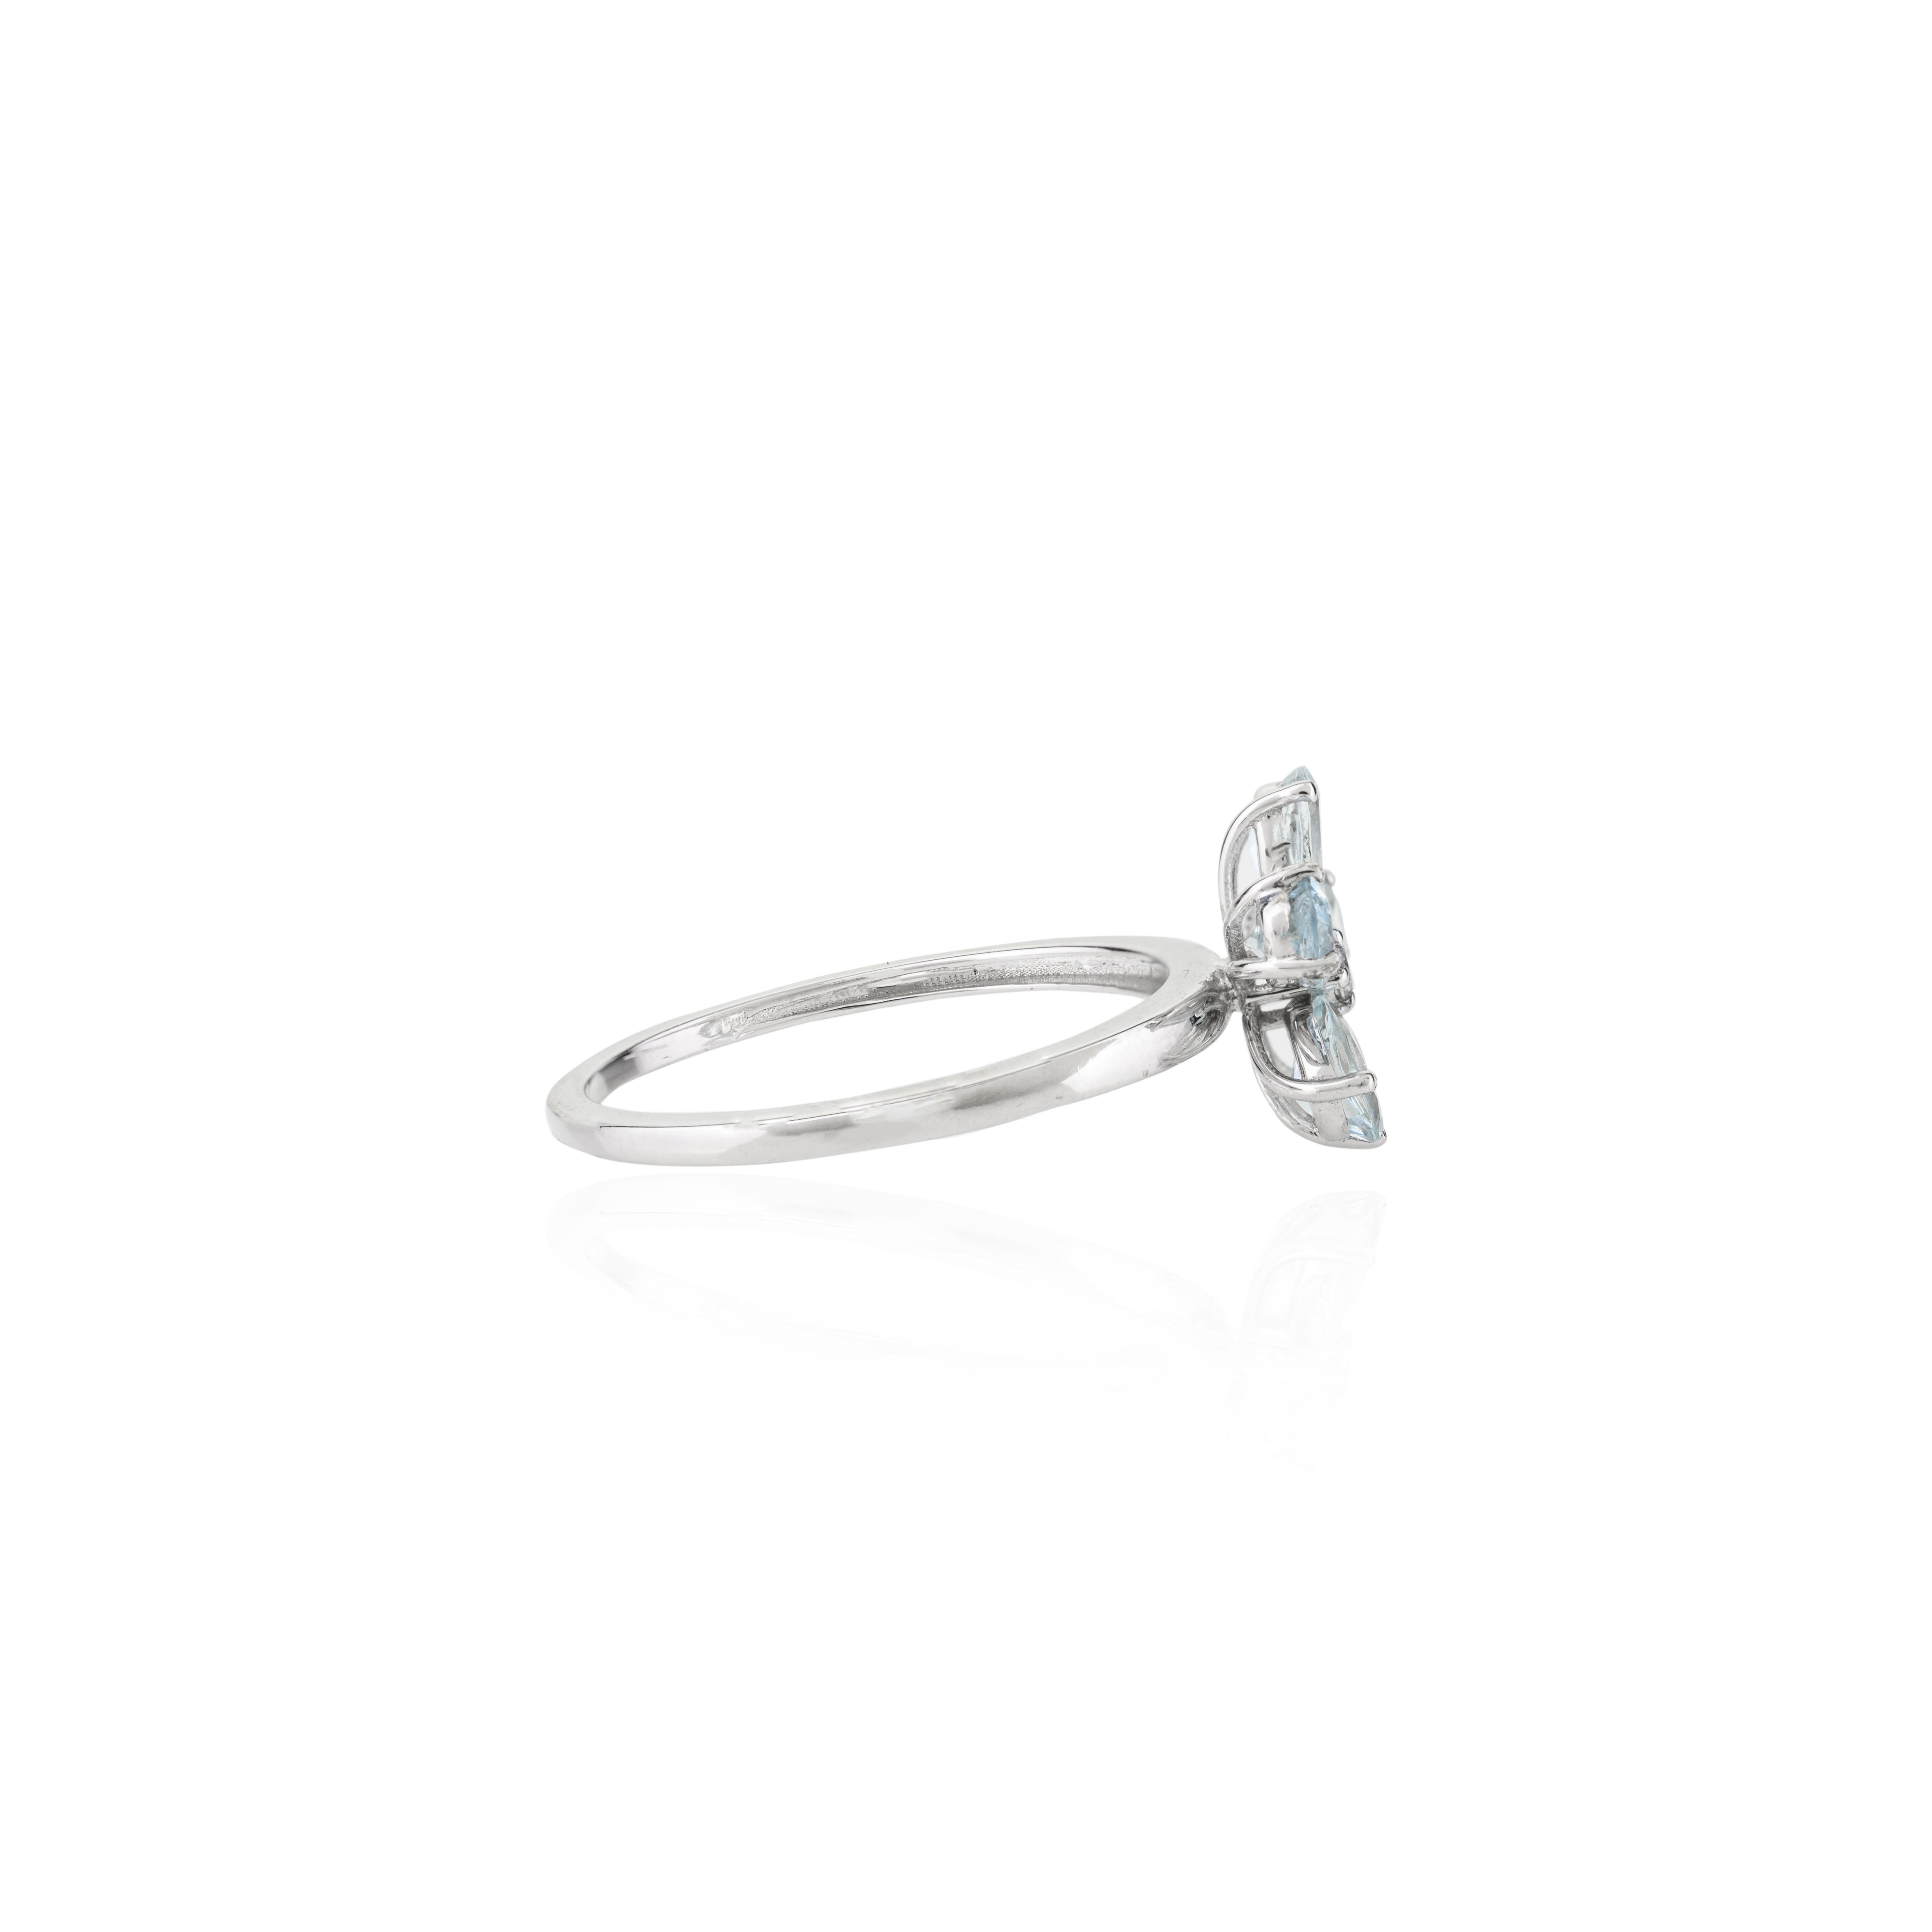 For Sale:  Natural Aquamarine Diamond Spring Flower Ring in 18k White Gold for Her 7